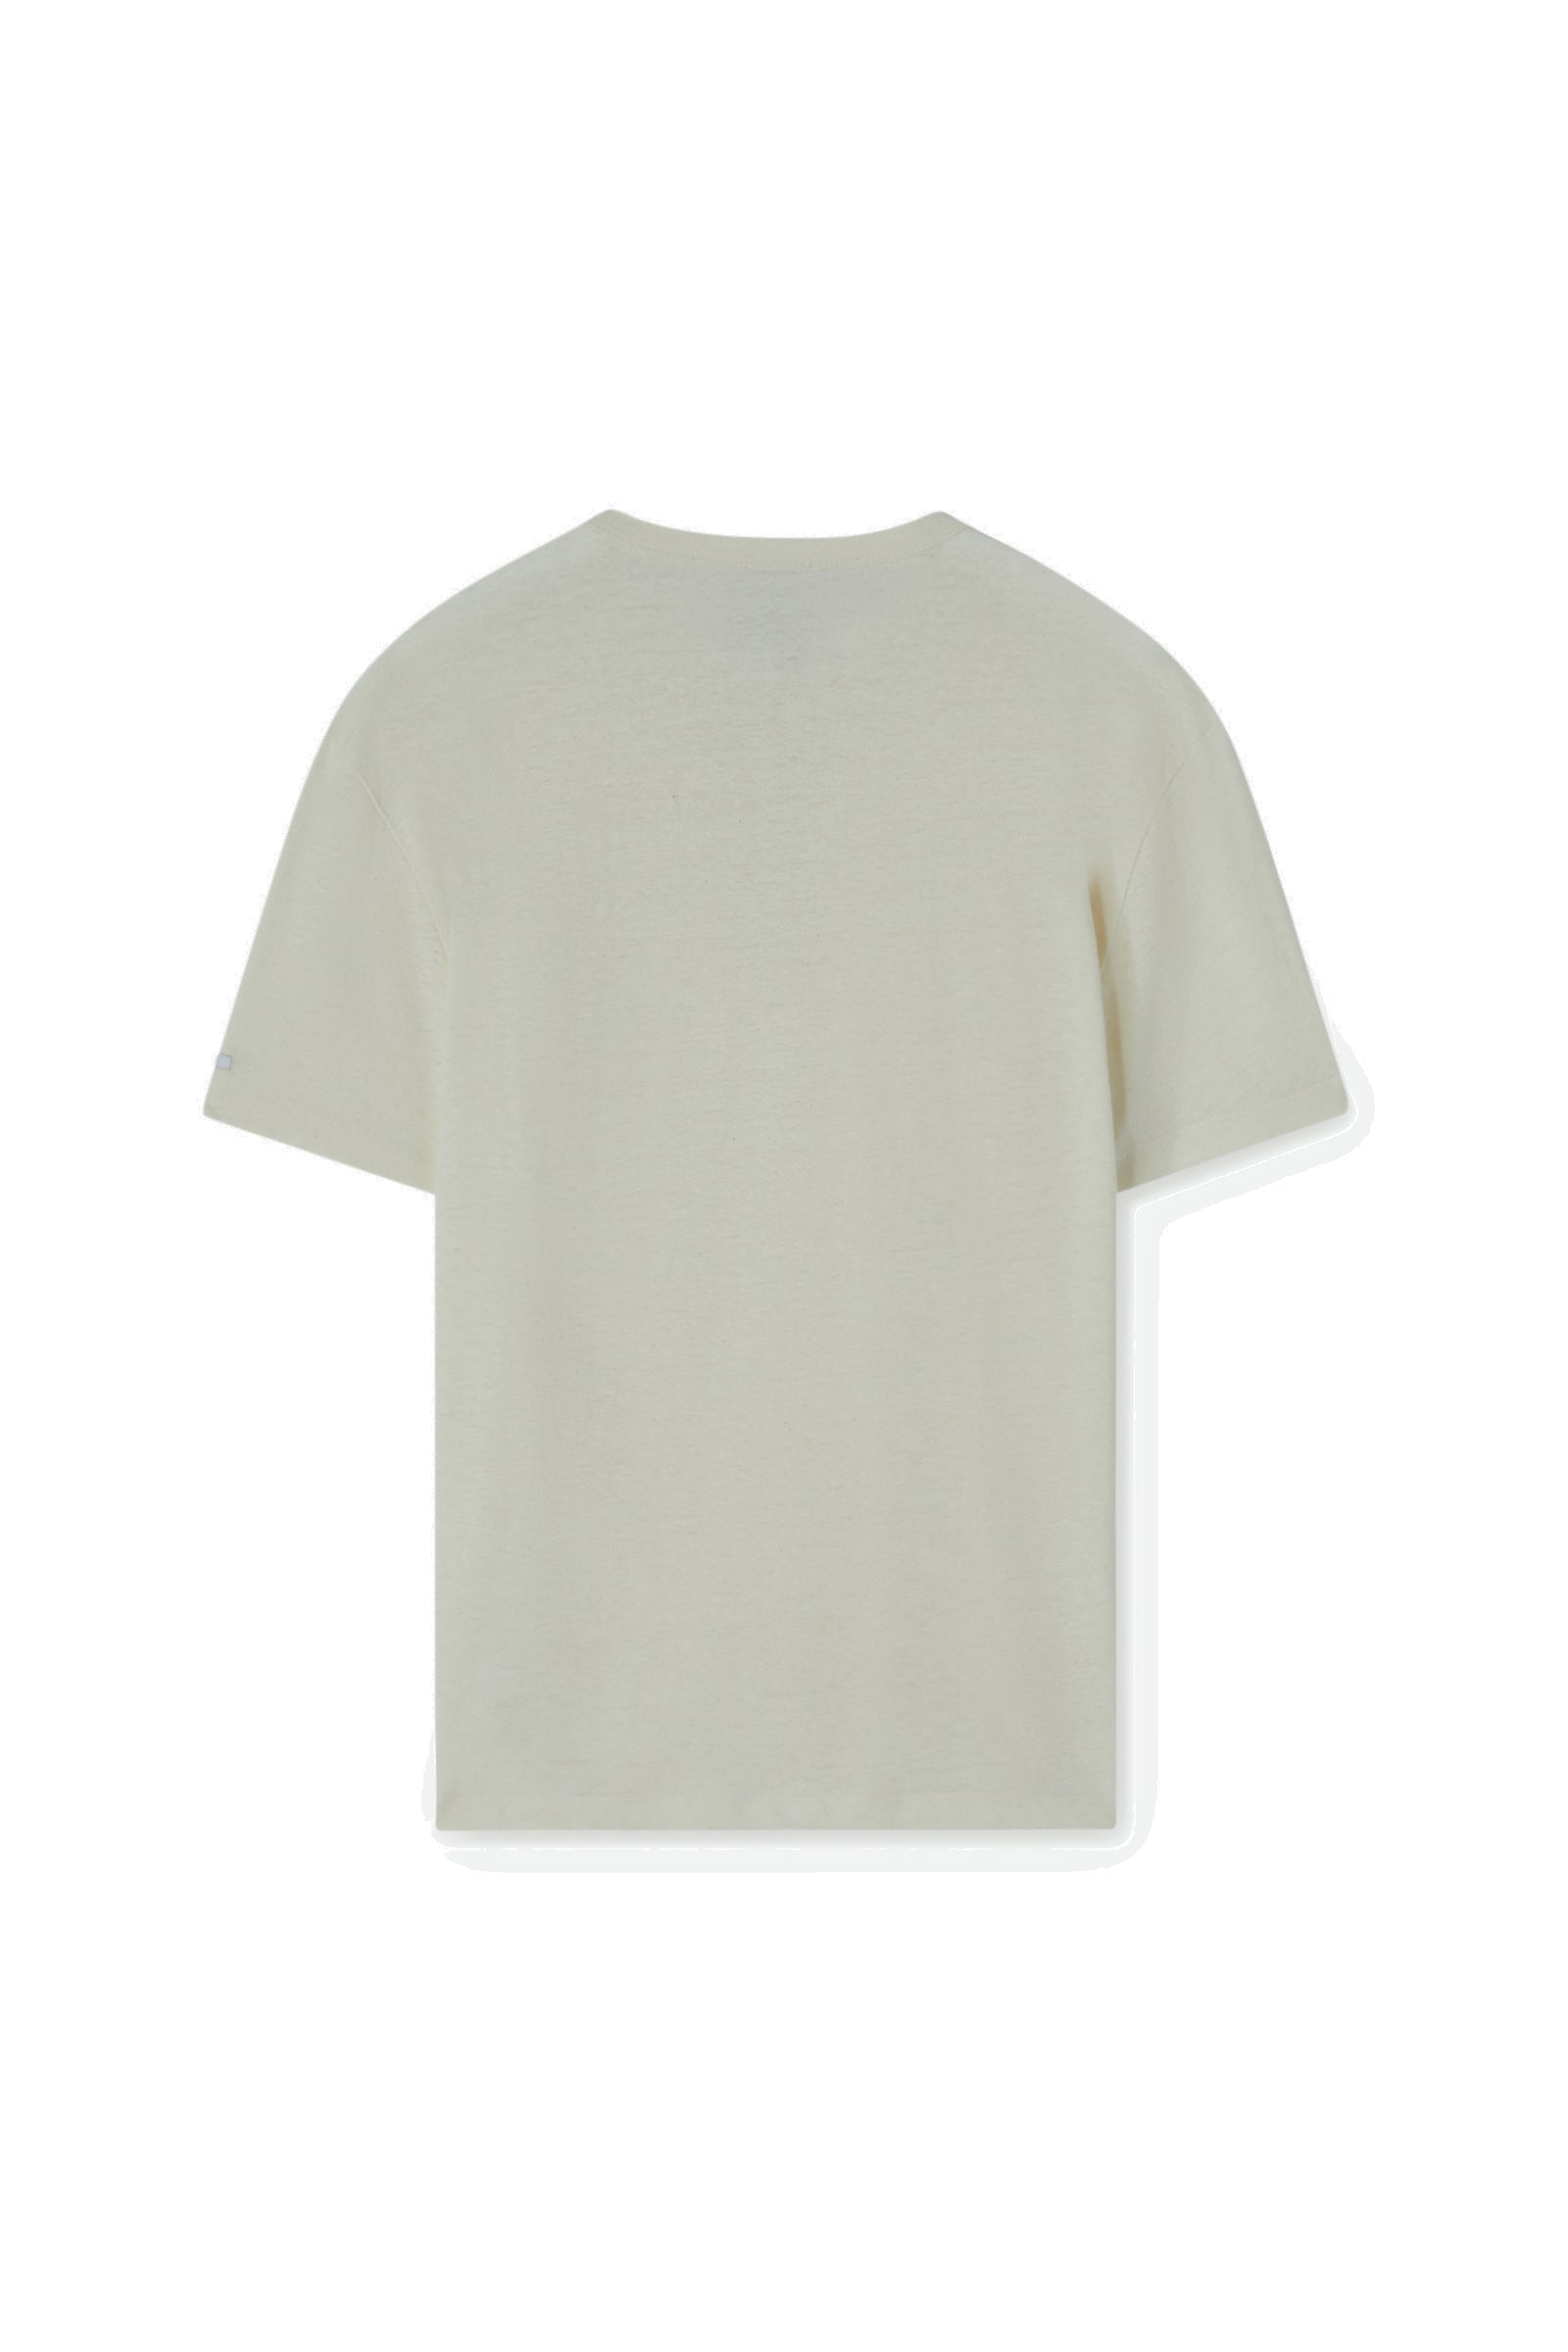 Edgard Ser T-Shirt in Jet Stream T-Shirts GAS   